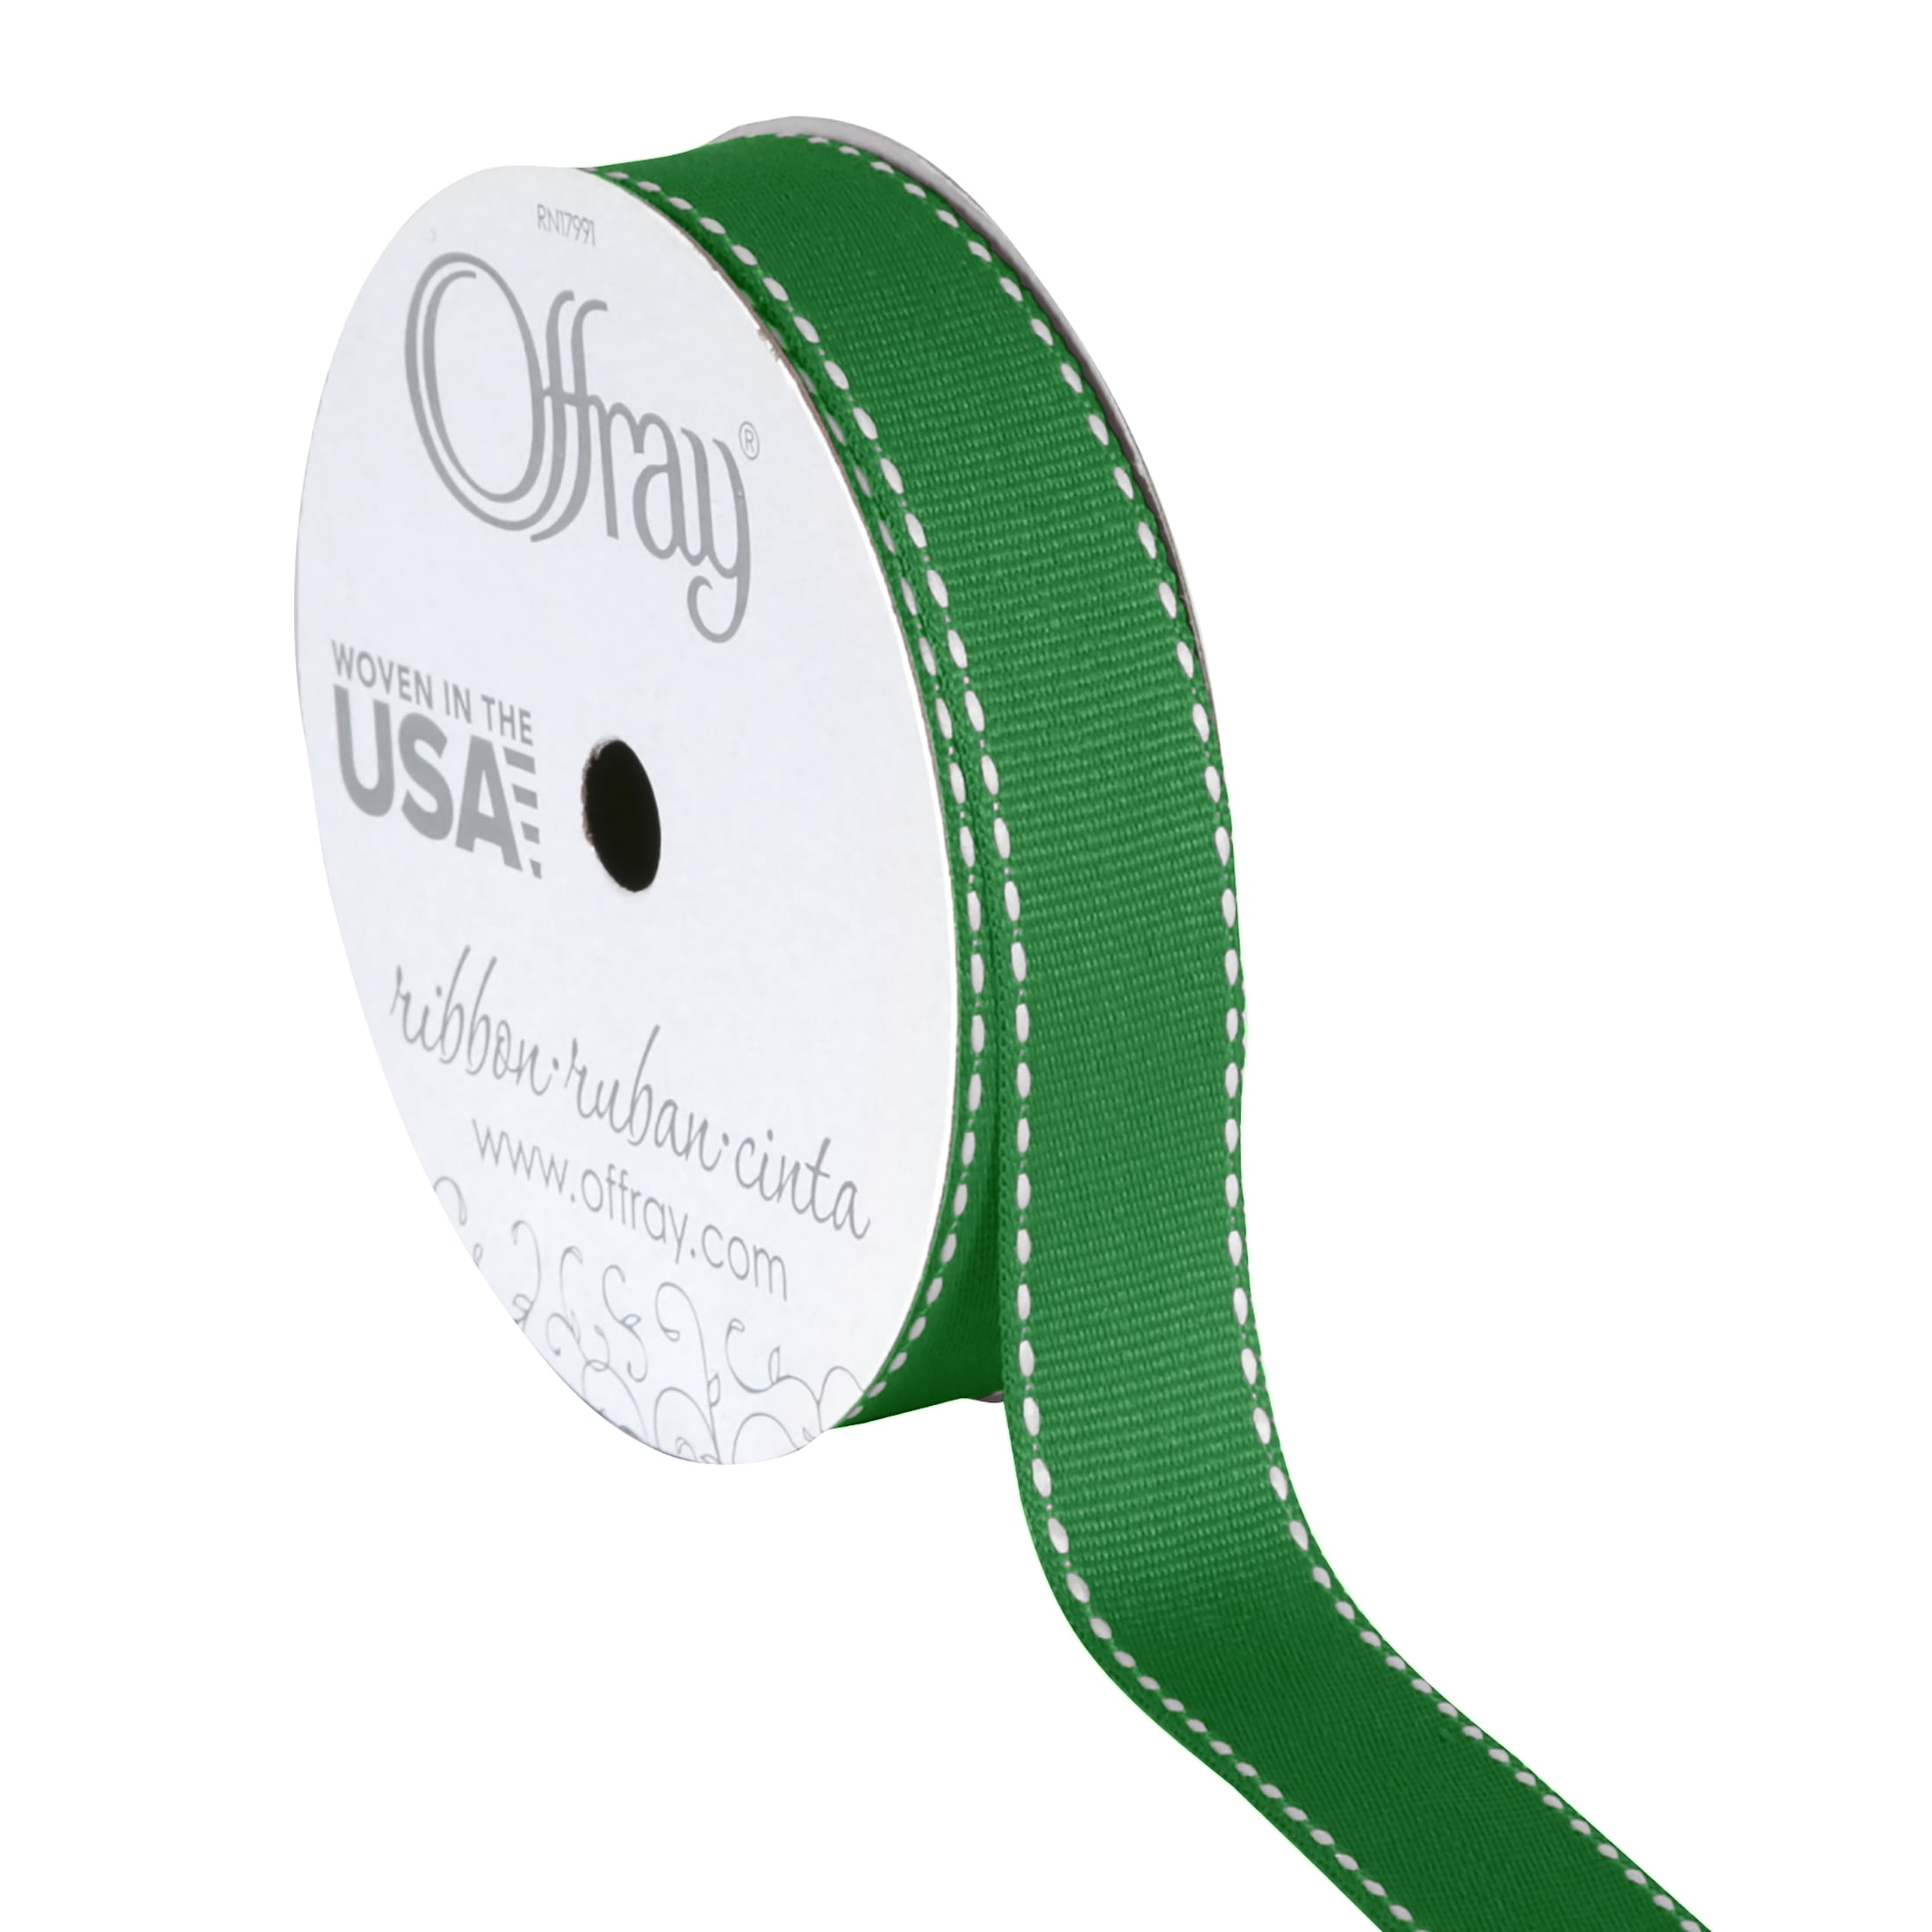 Offray Ribbon, Emerald Green 5/8 inch Side Stitch Grosgrain Polyester Ribbon, 9 feet